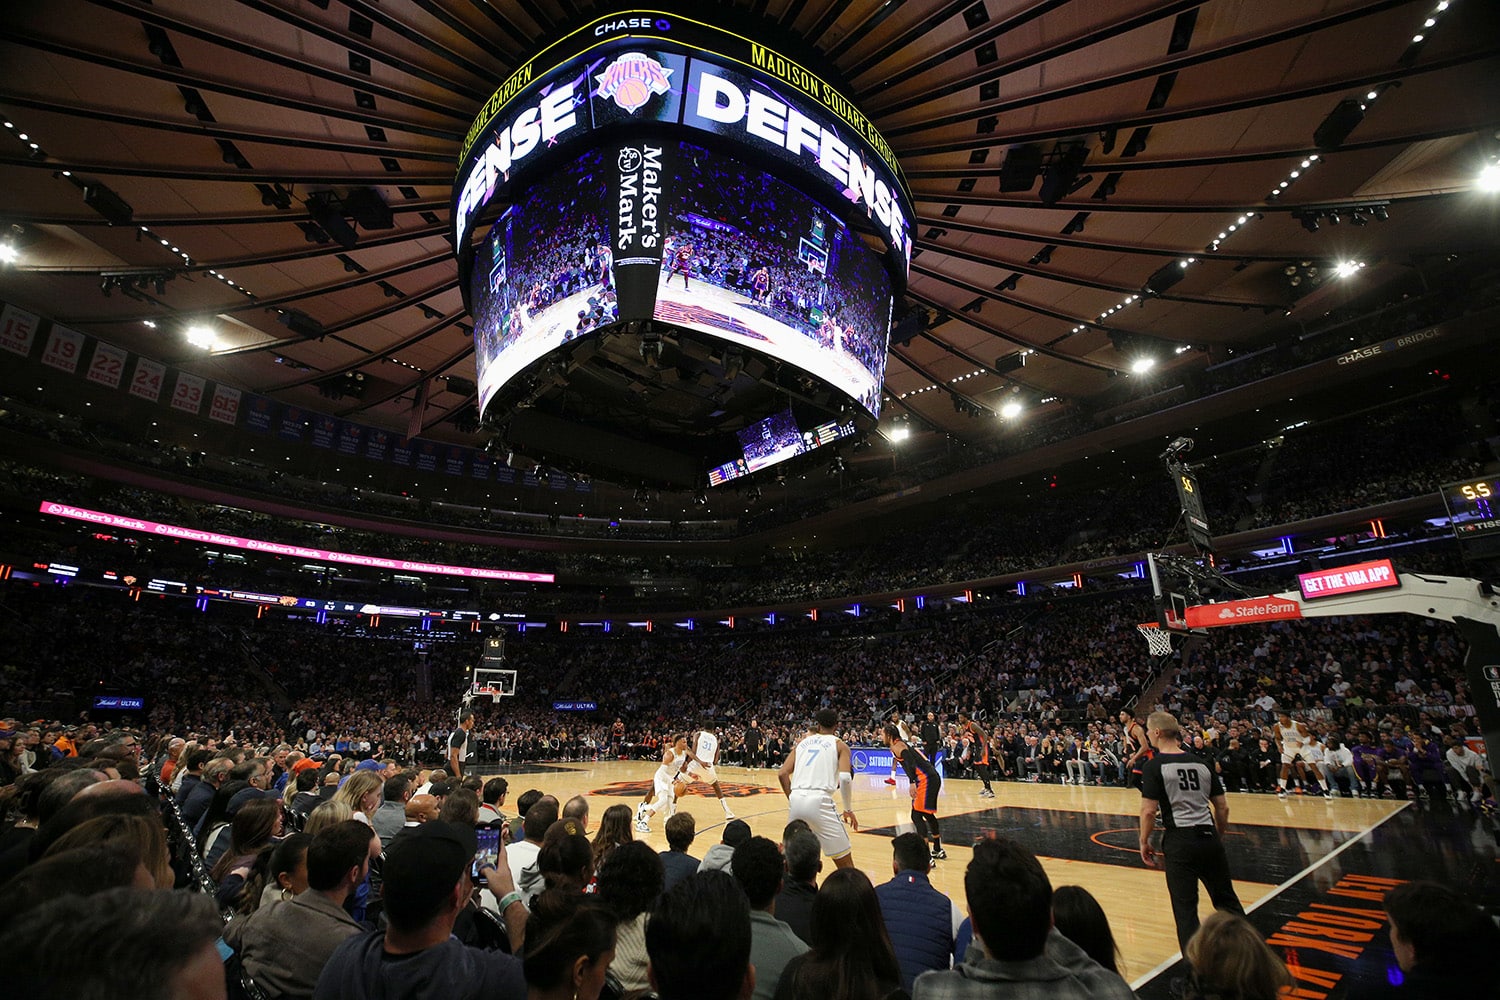 Knicks Game at Madison Square Garden 